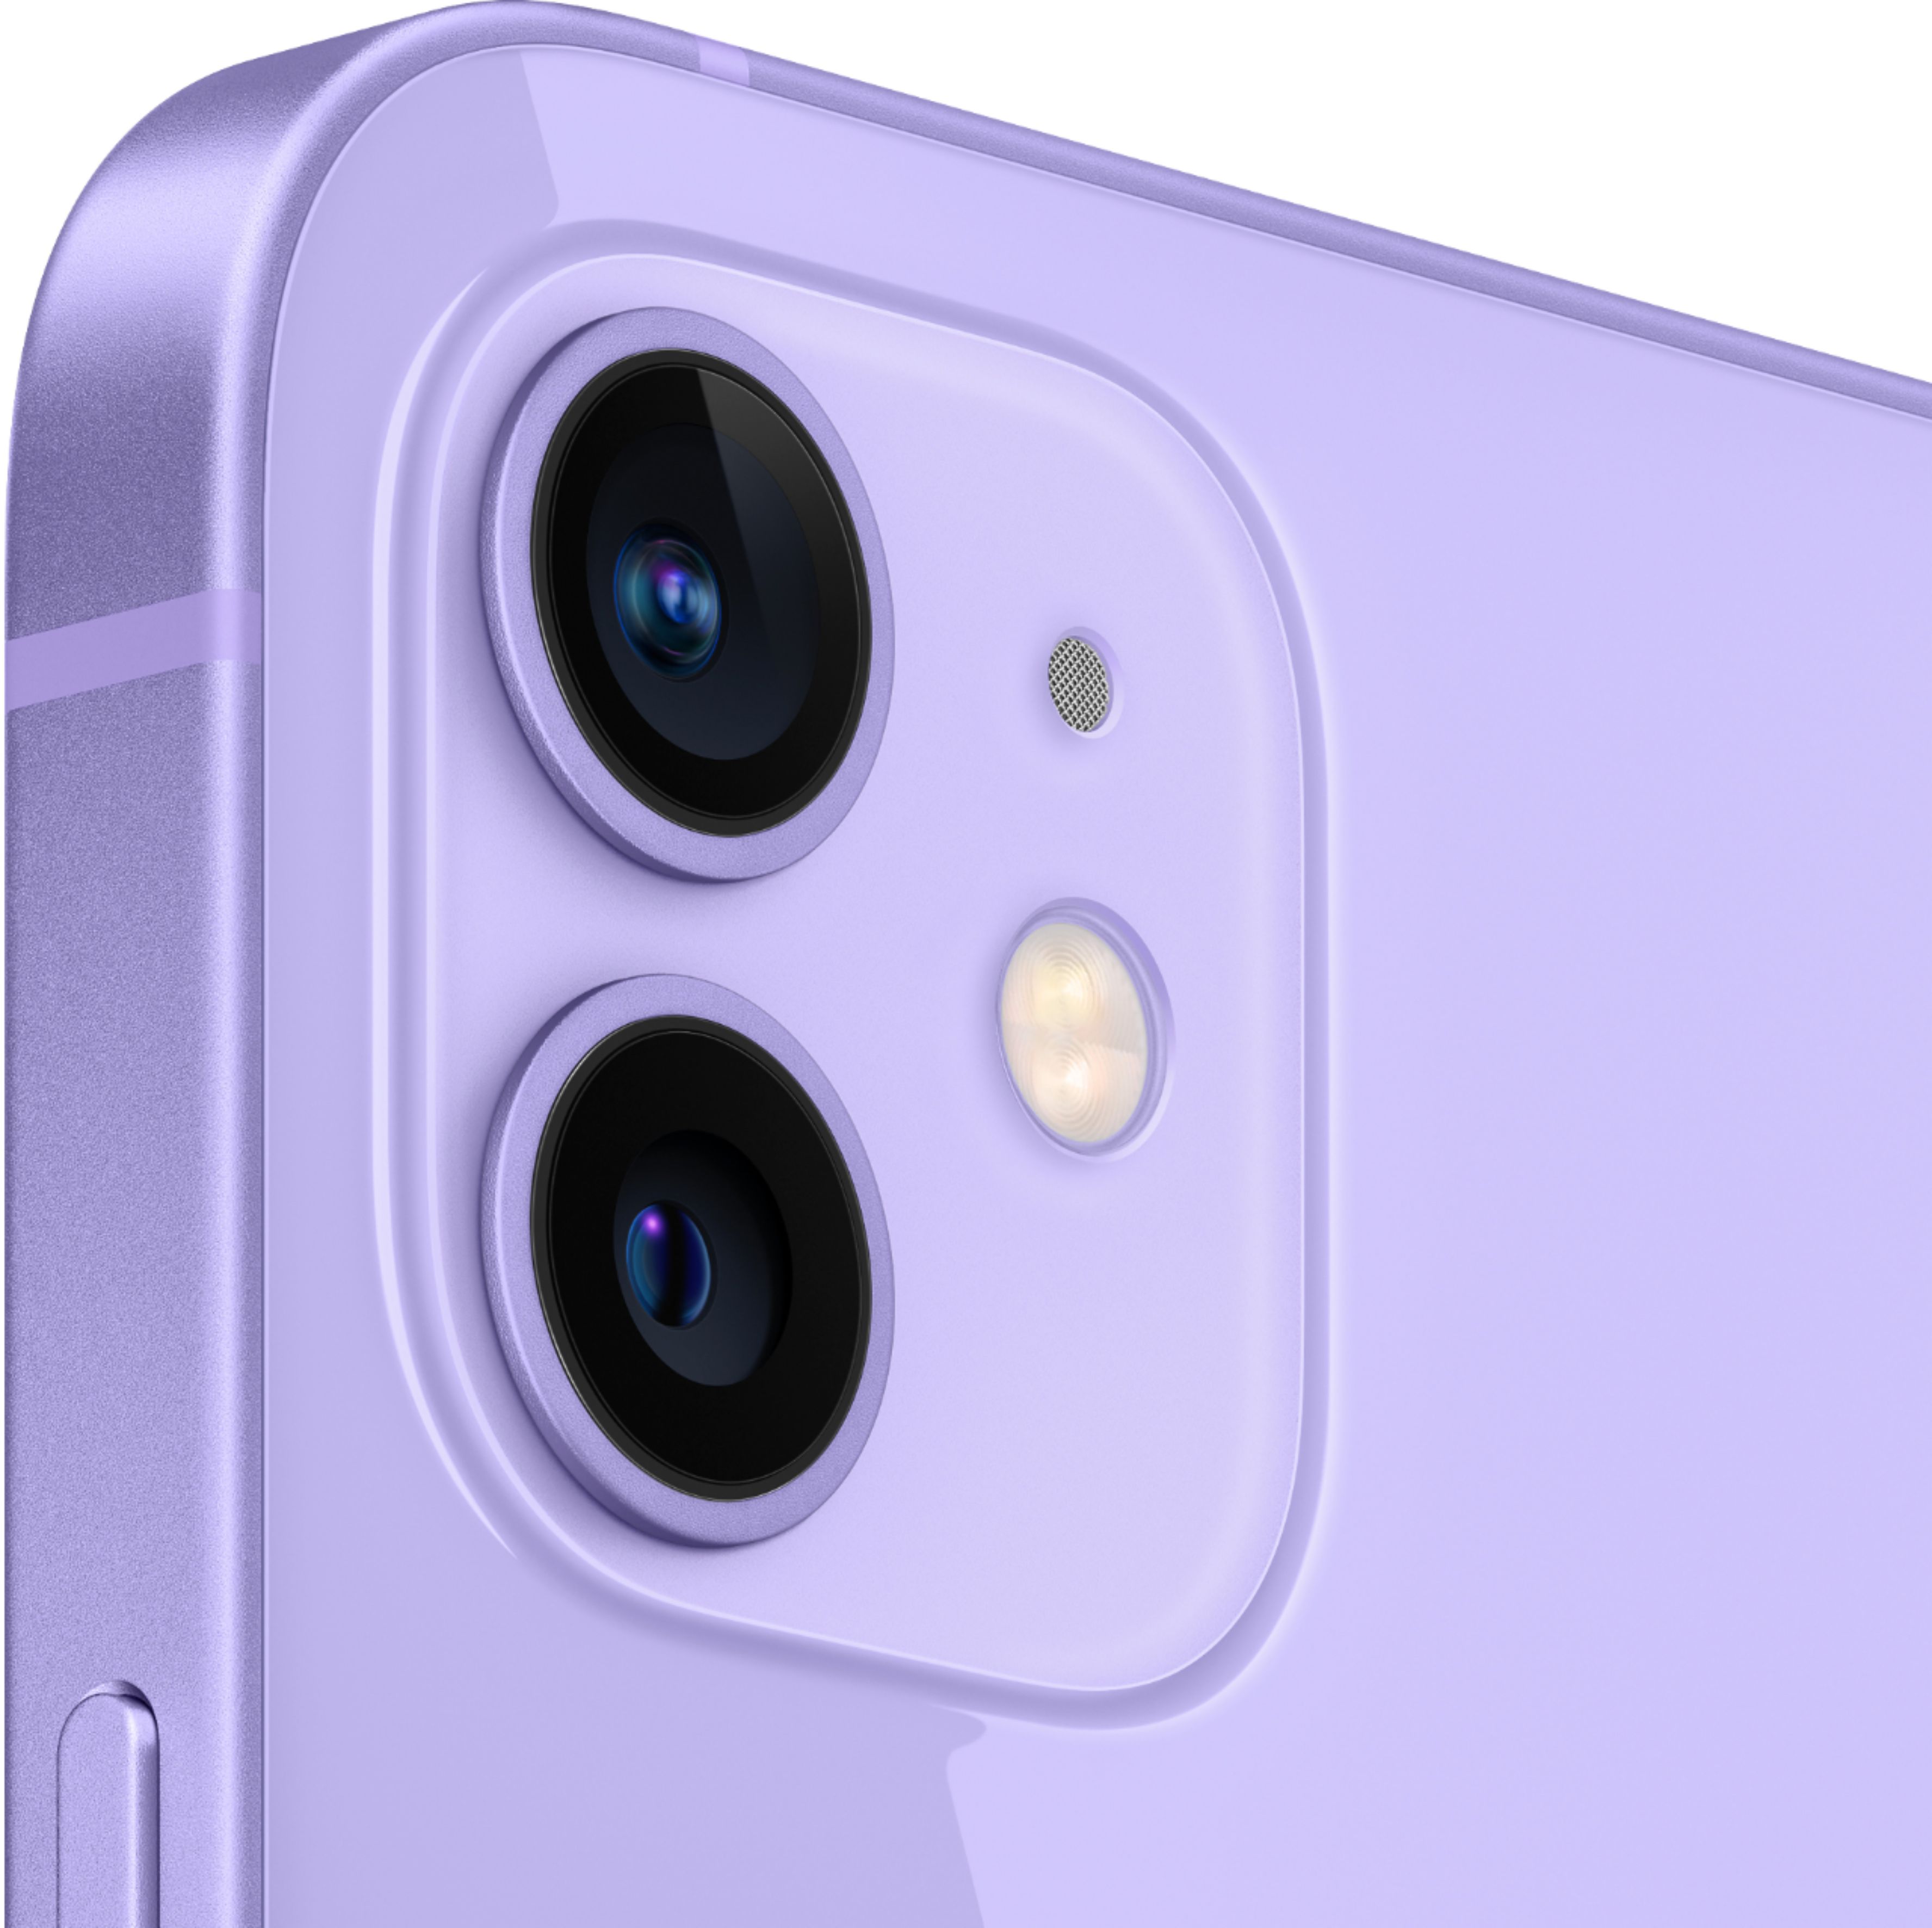 Apple iPhone 12 128GB Purple (MJNP3) 